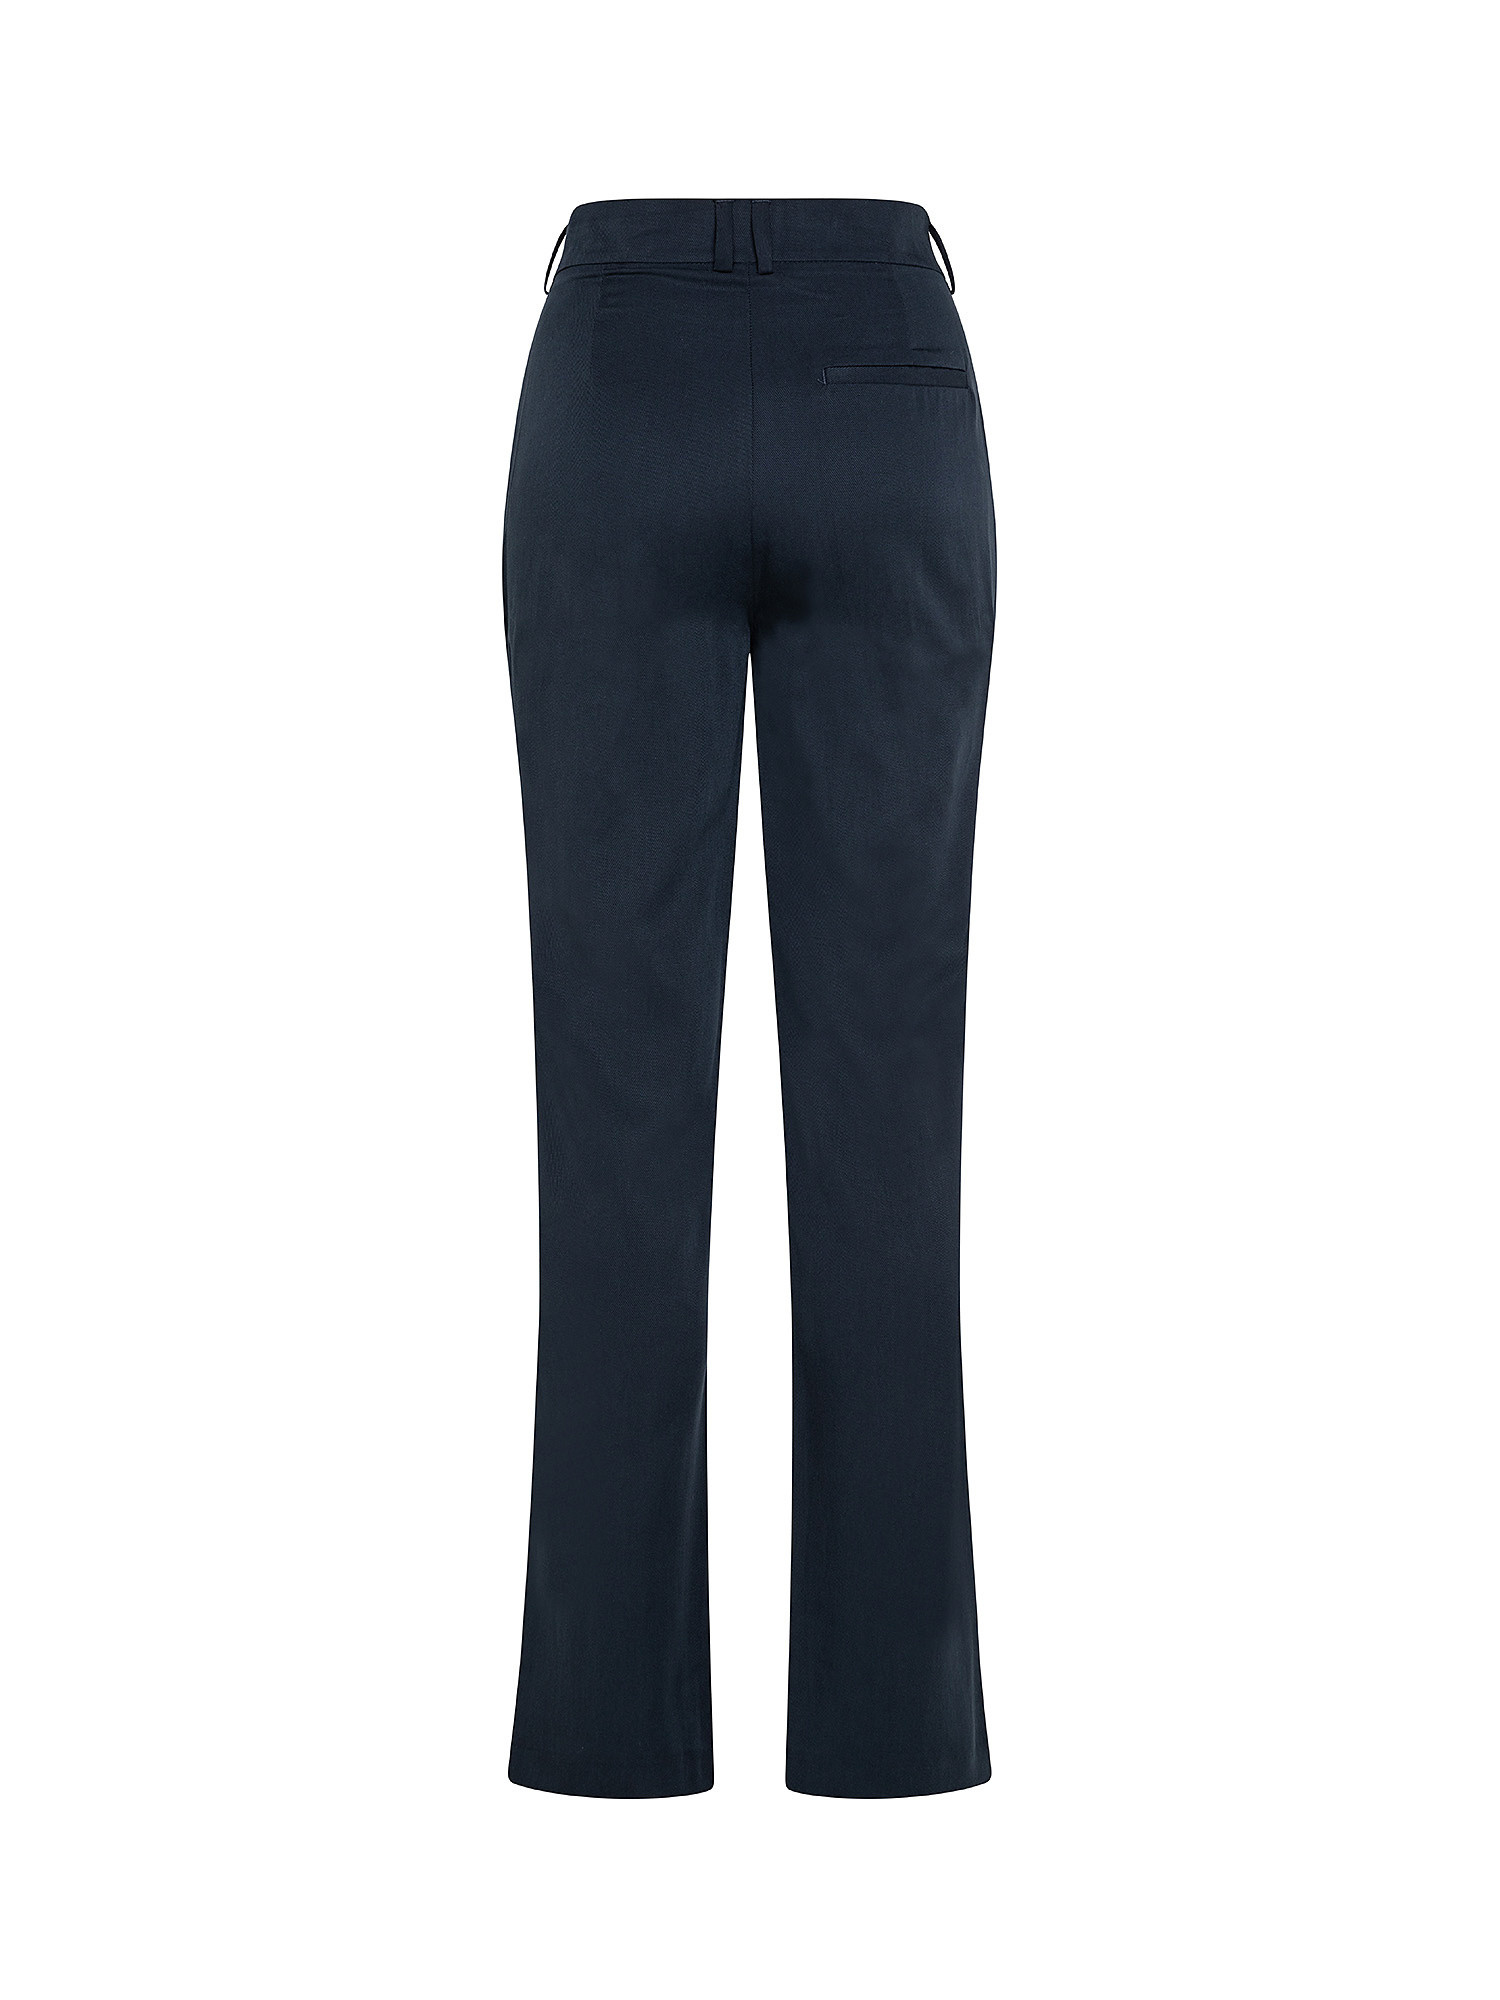 Fatima chino pants, Dark Blue, large image number 1